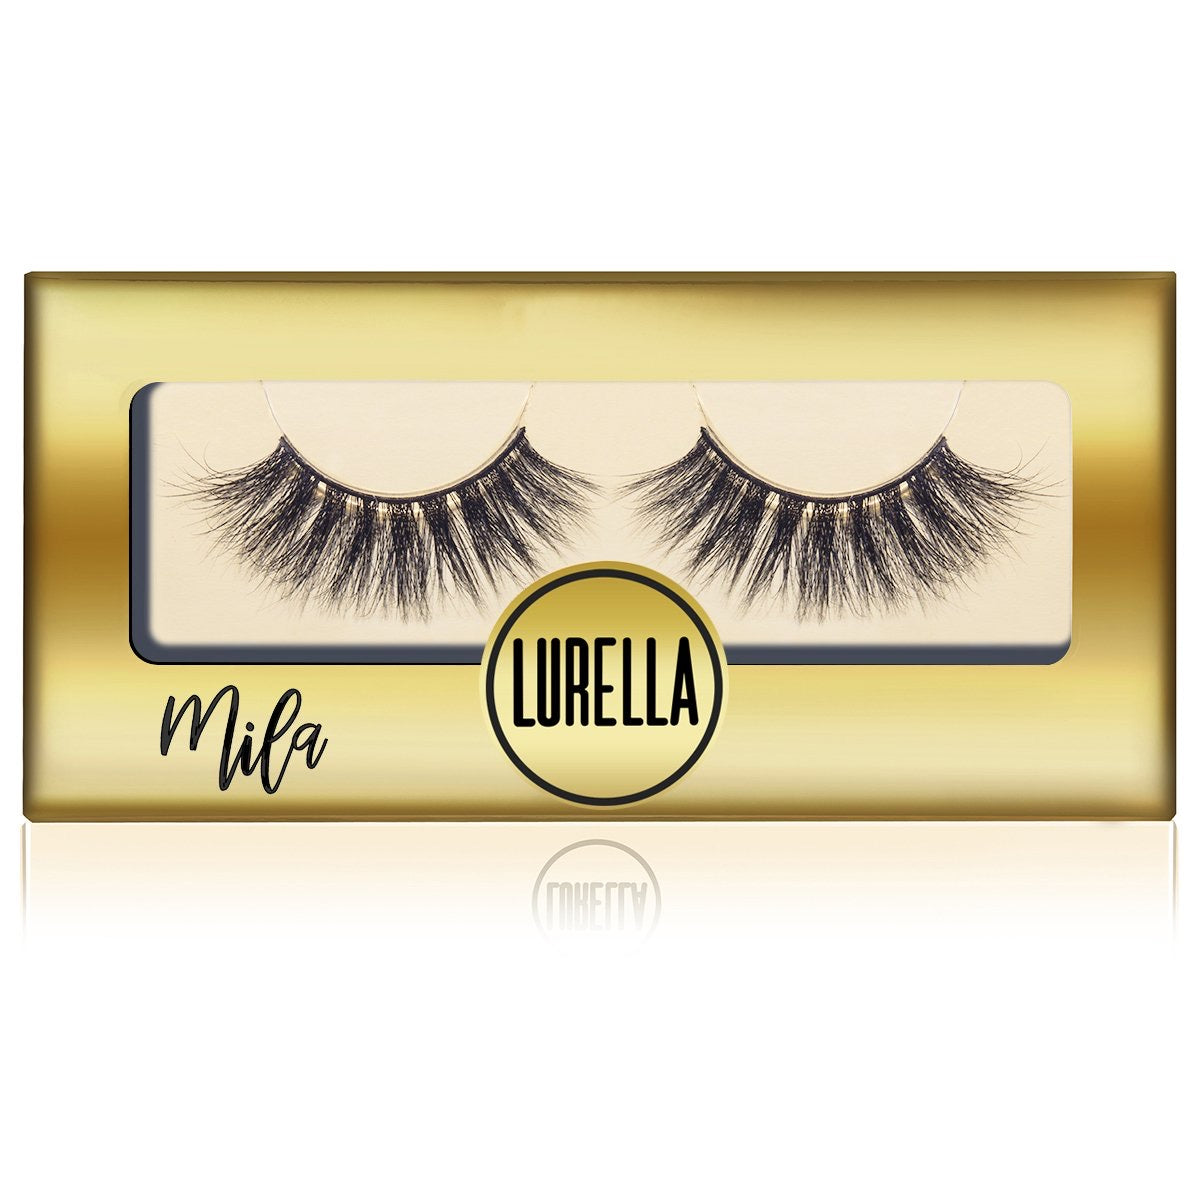 Mila - Lurella Cosmetics